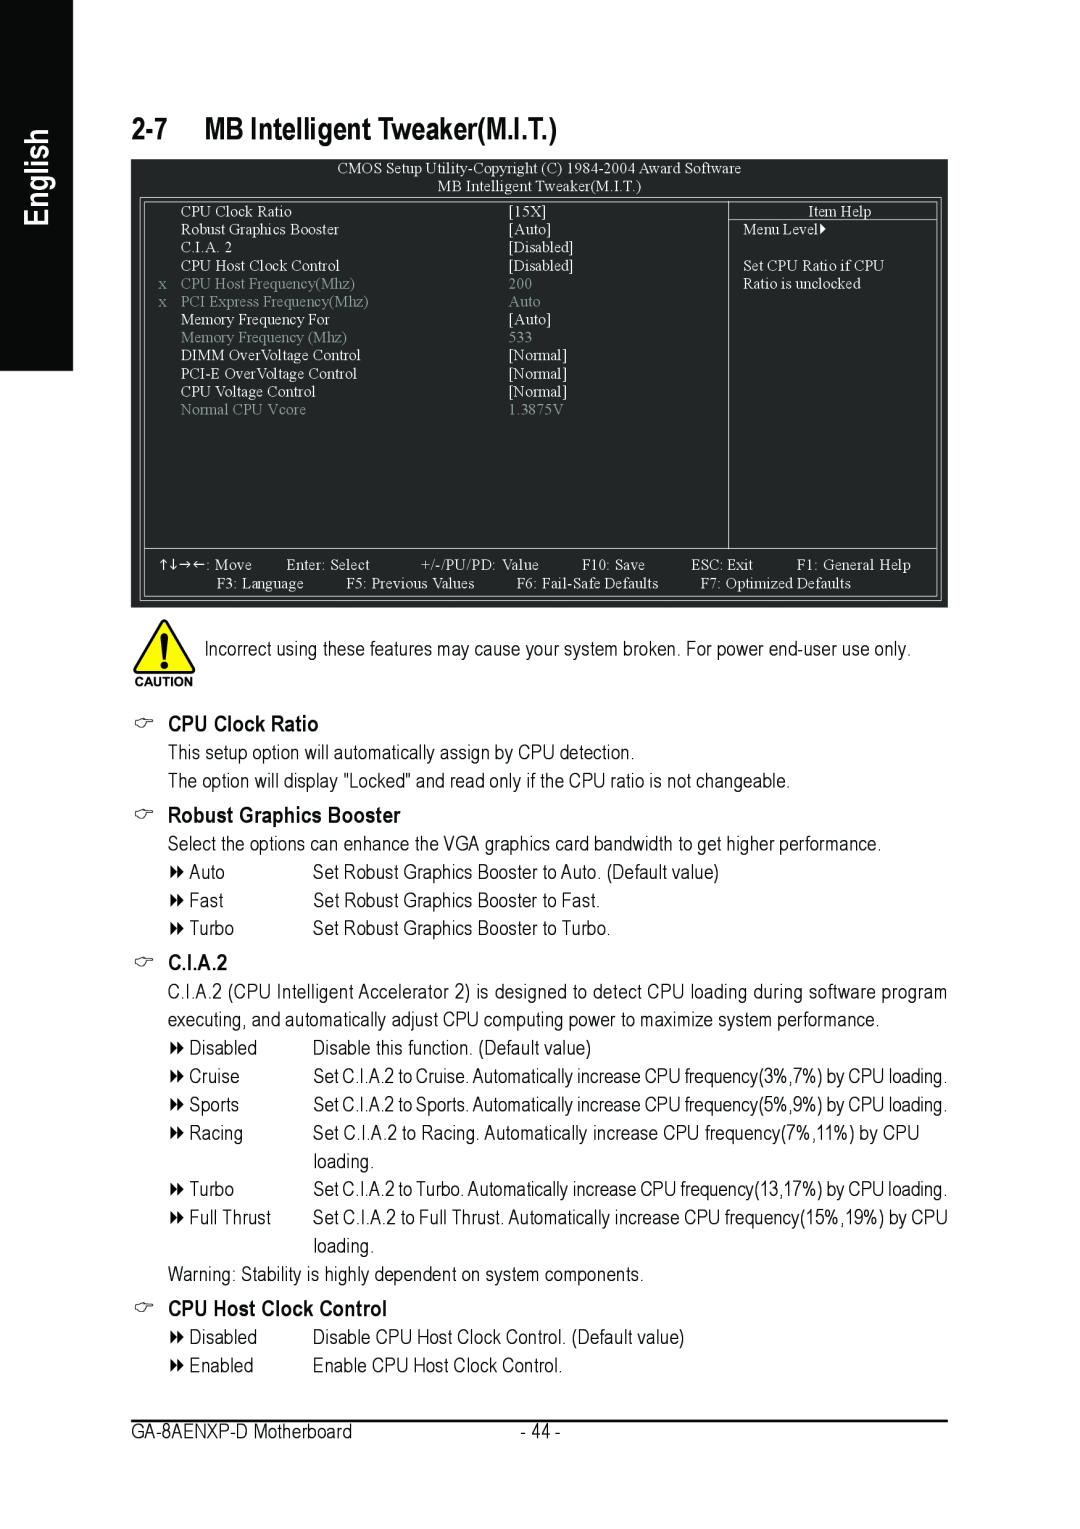 Gigabyte GA-8AENXP-D user manual MB Intelligent TweakerM.I.T, CPU Clock Ratio, Robust Graphics Booster, C.I.A.2, English 